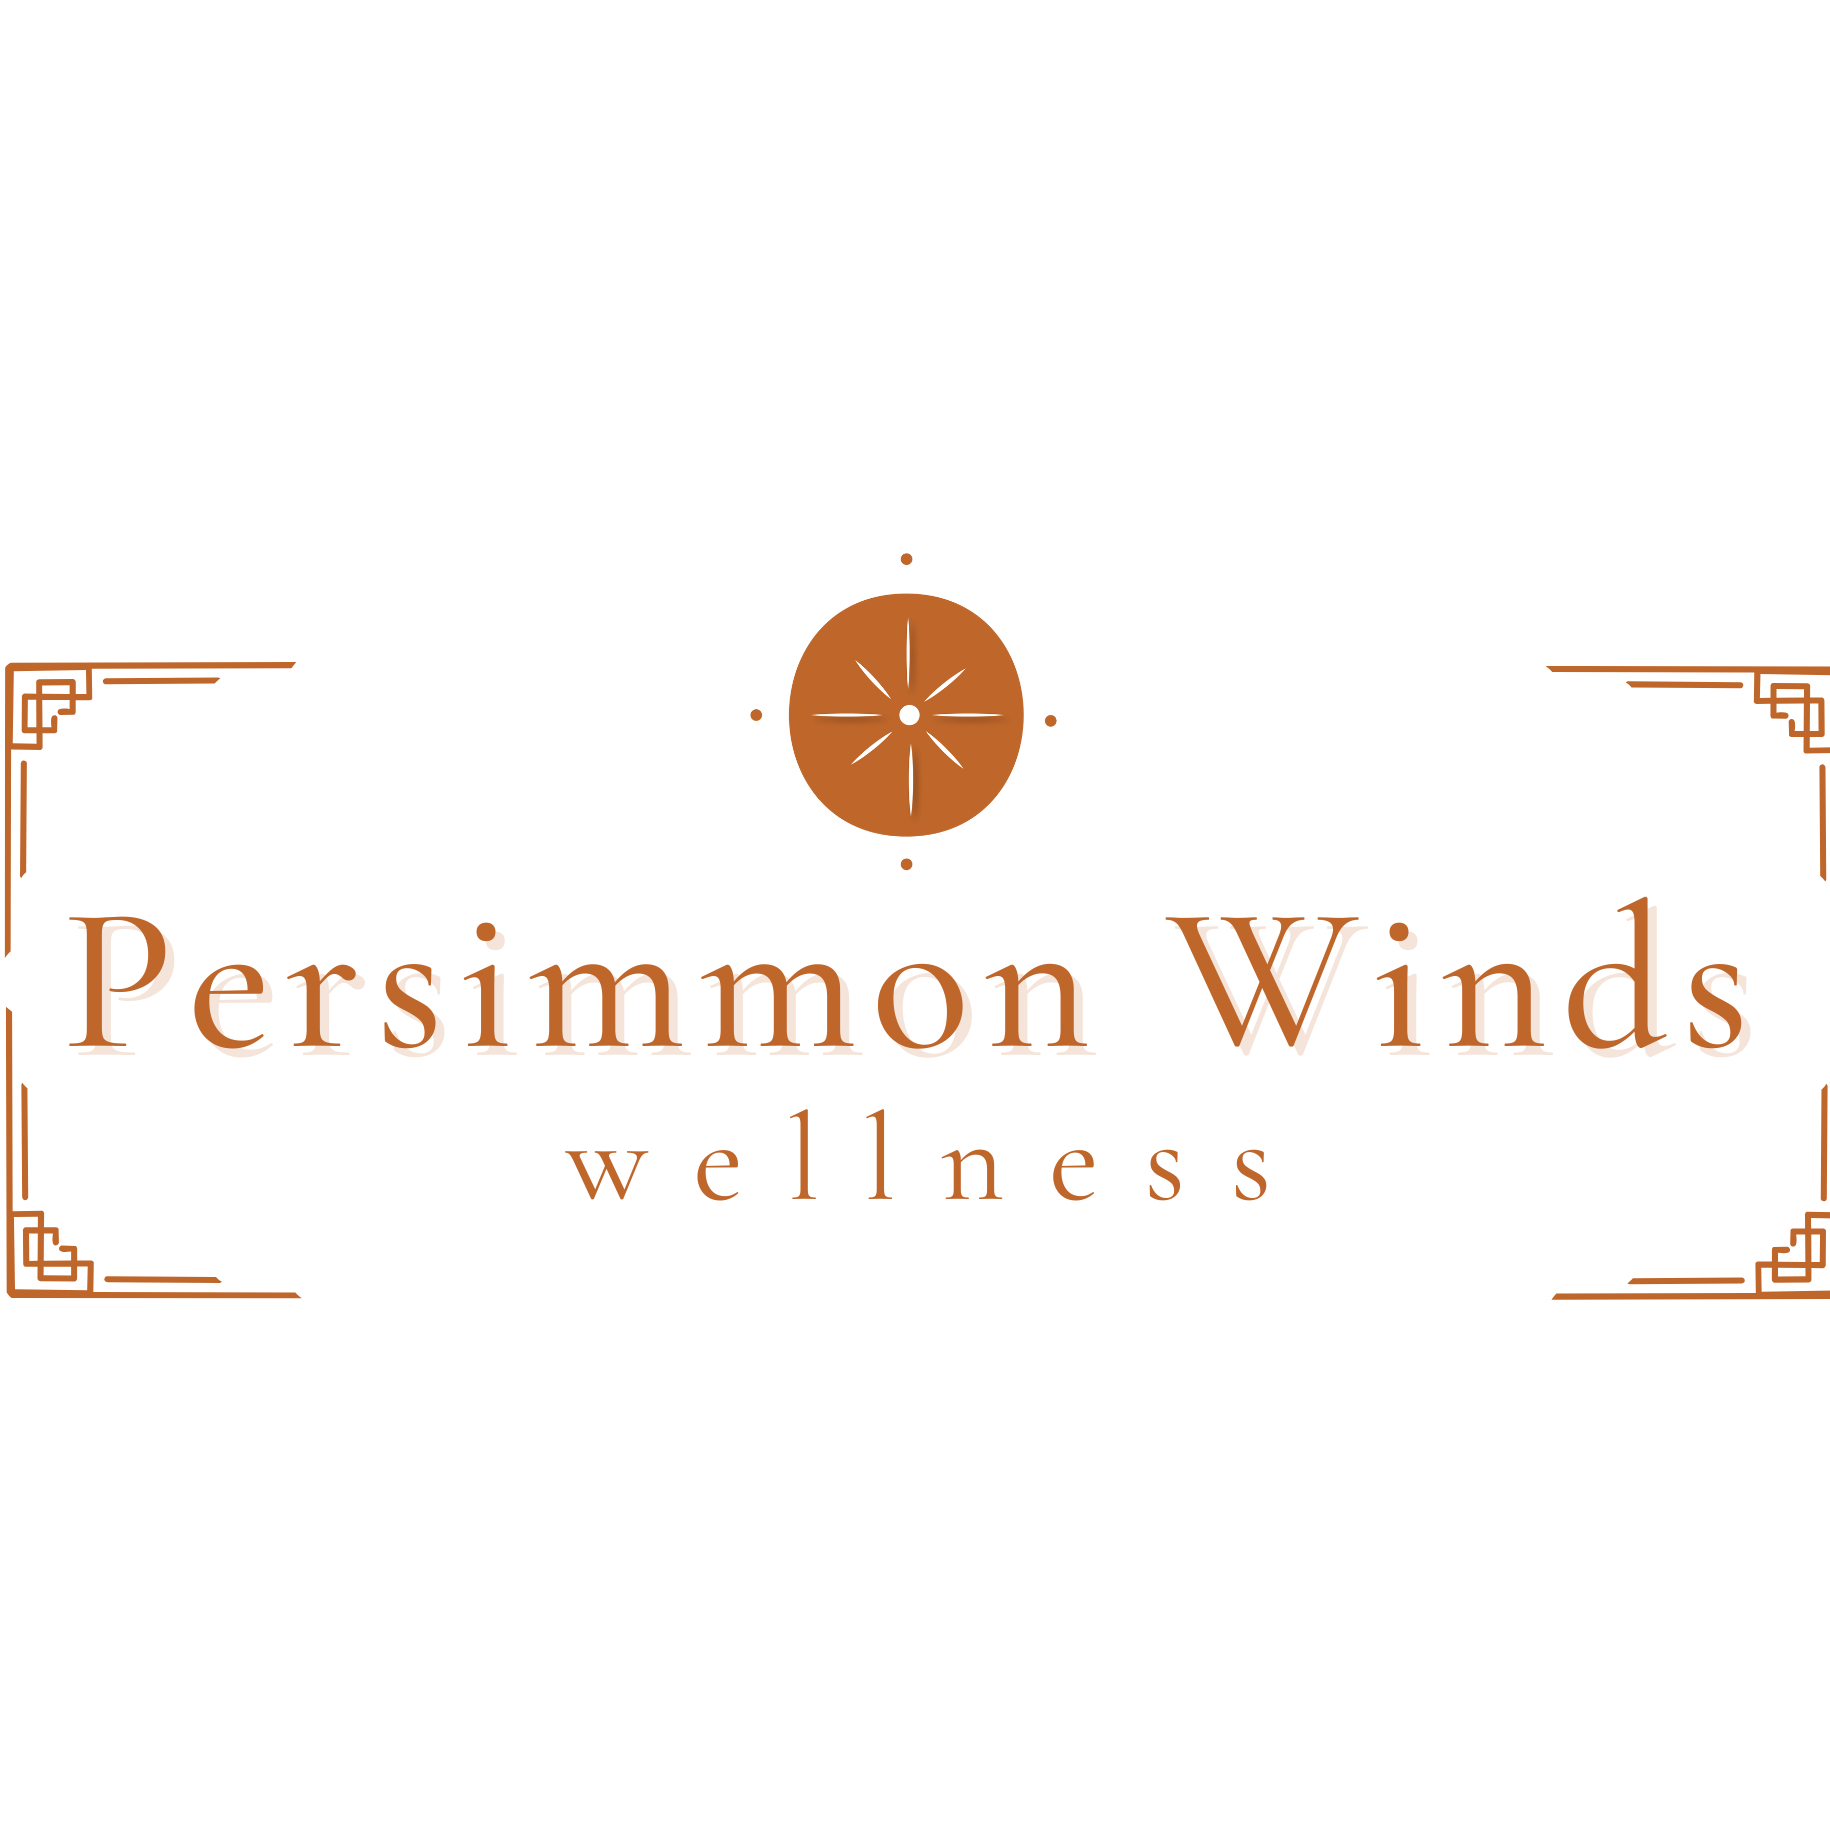 Persimmon Winds Wellness LLC